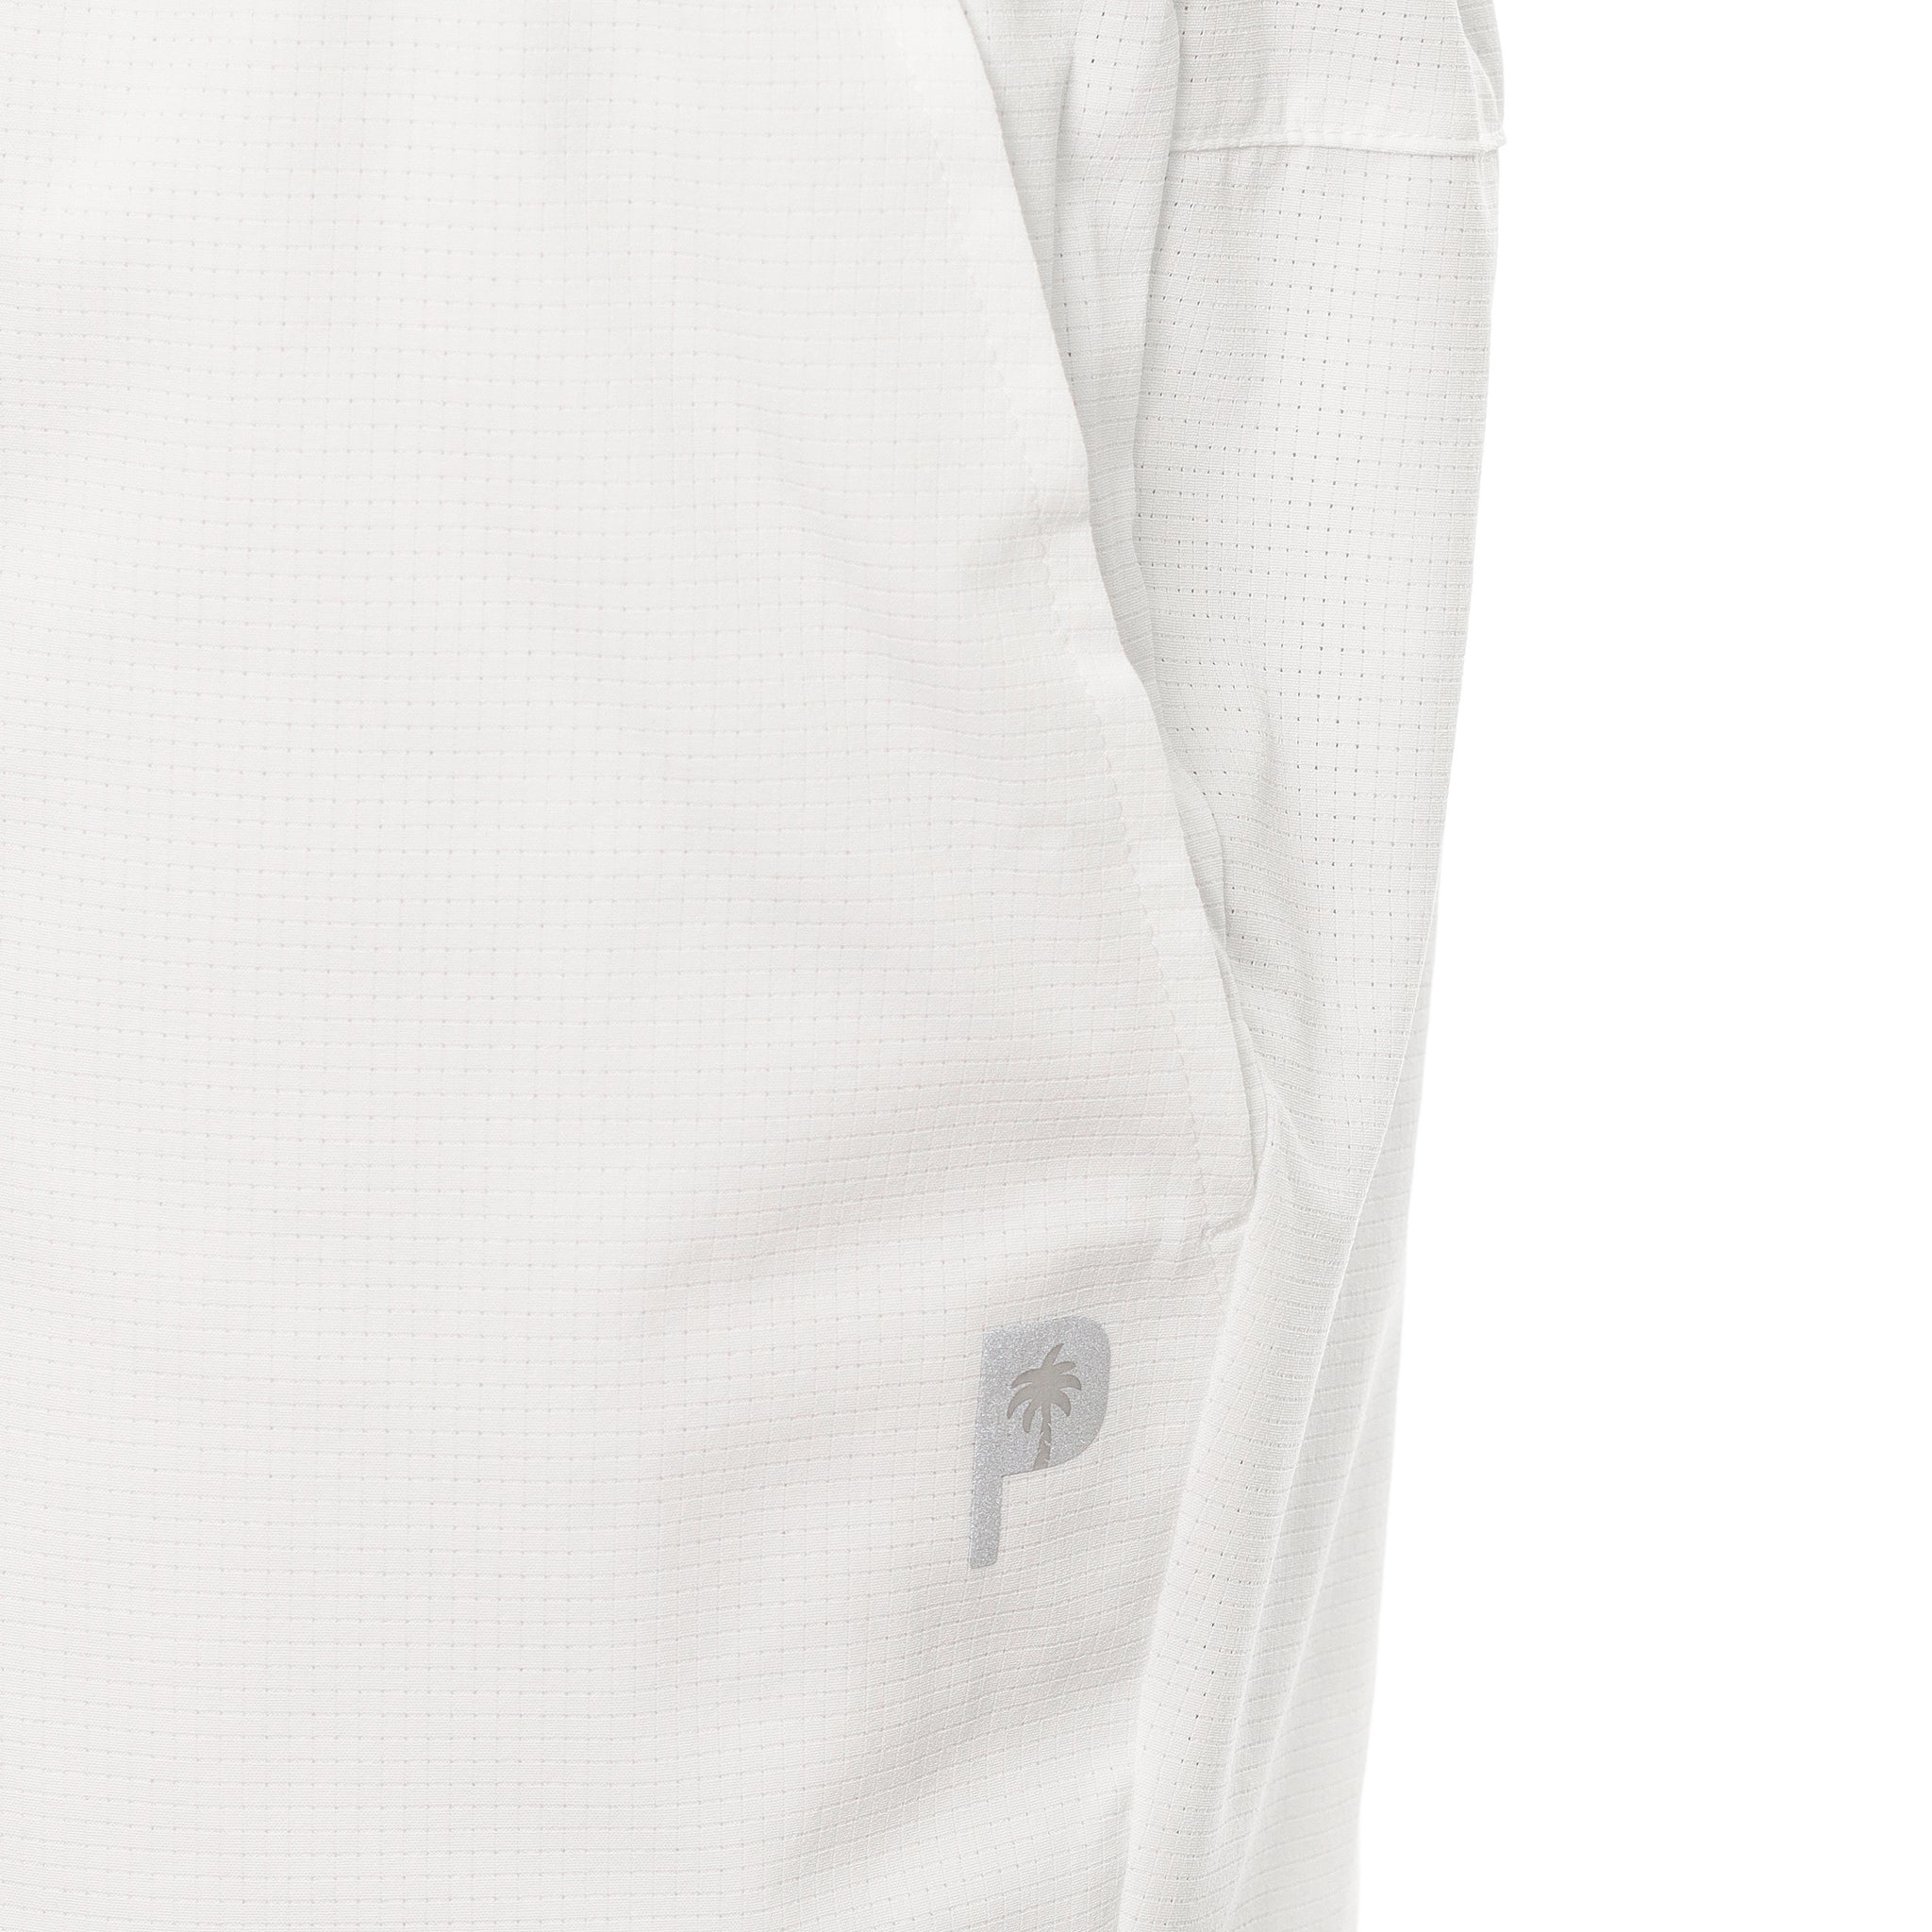 Puma Golf x PTC Vented Shorts 539203 Bright White 01 & Function18